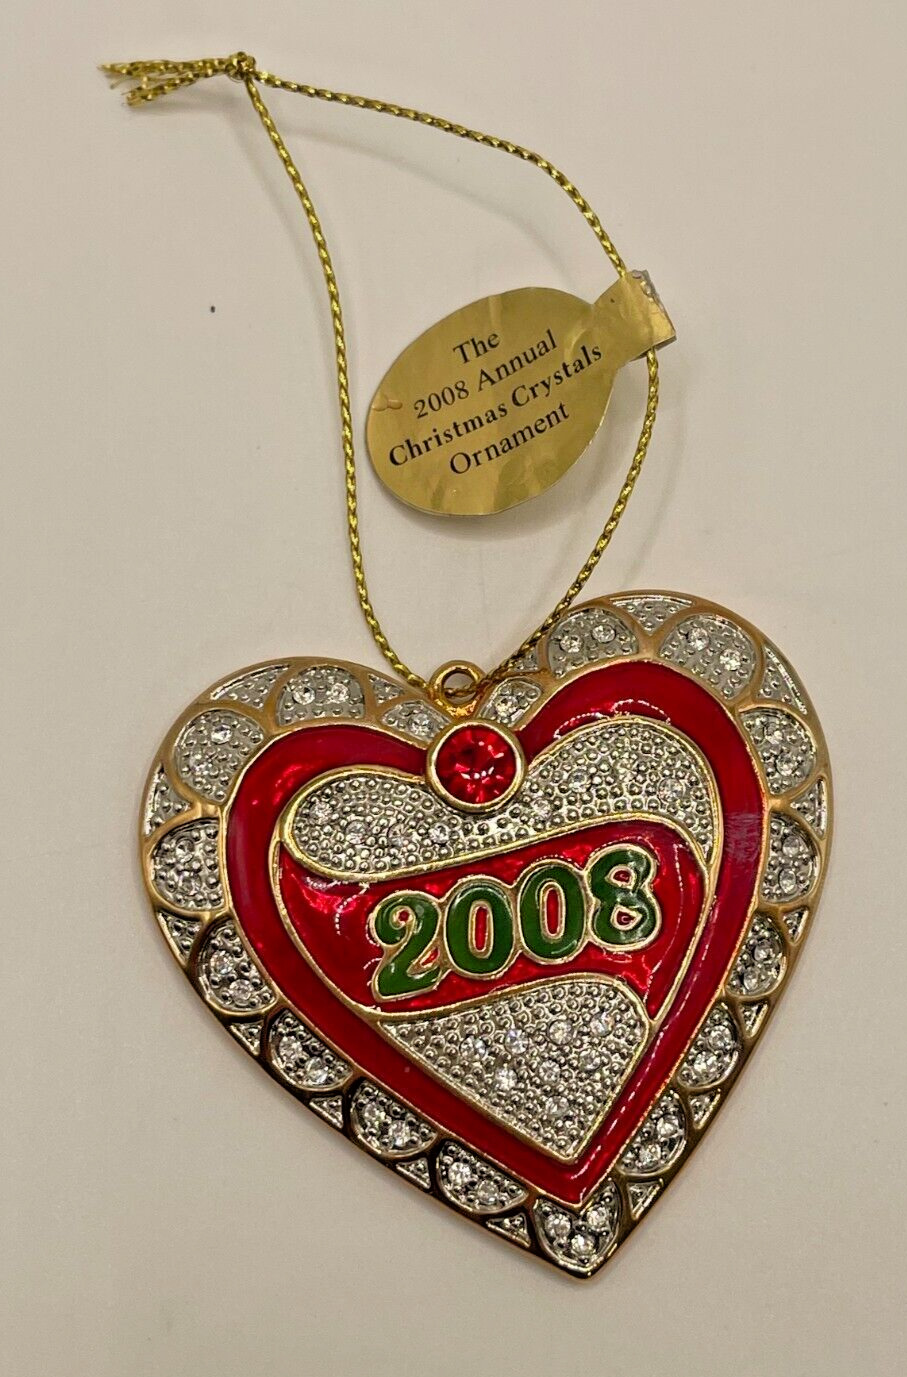 2008 Danbury Mint Annual Christmas Crystal Heart Ornament  